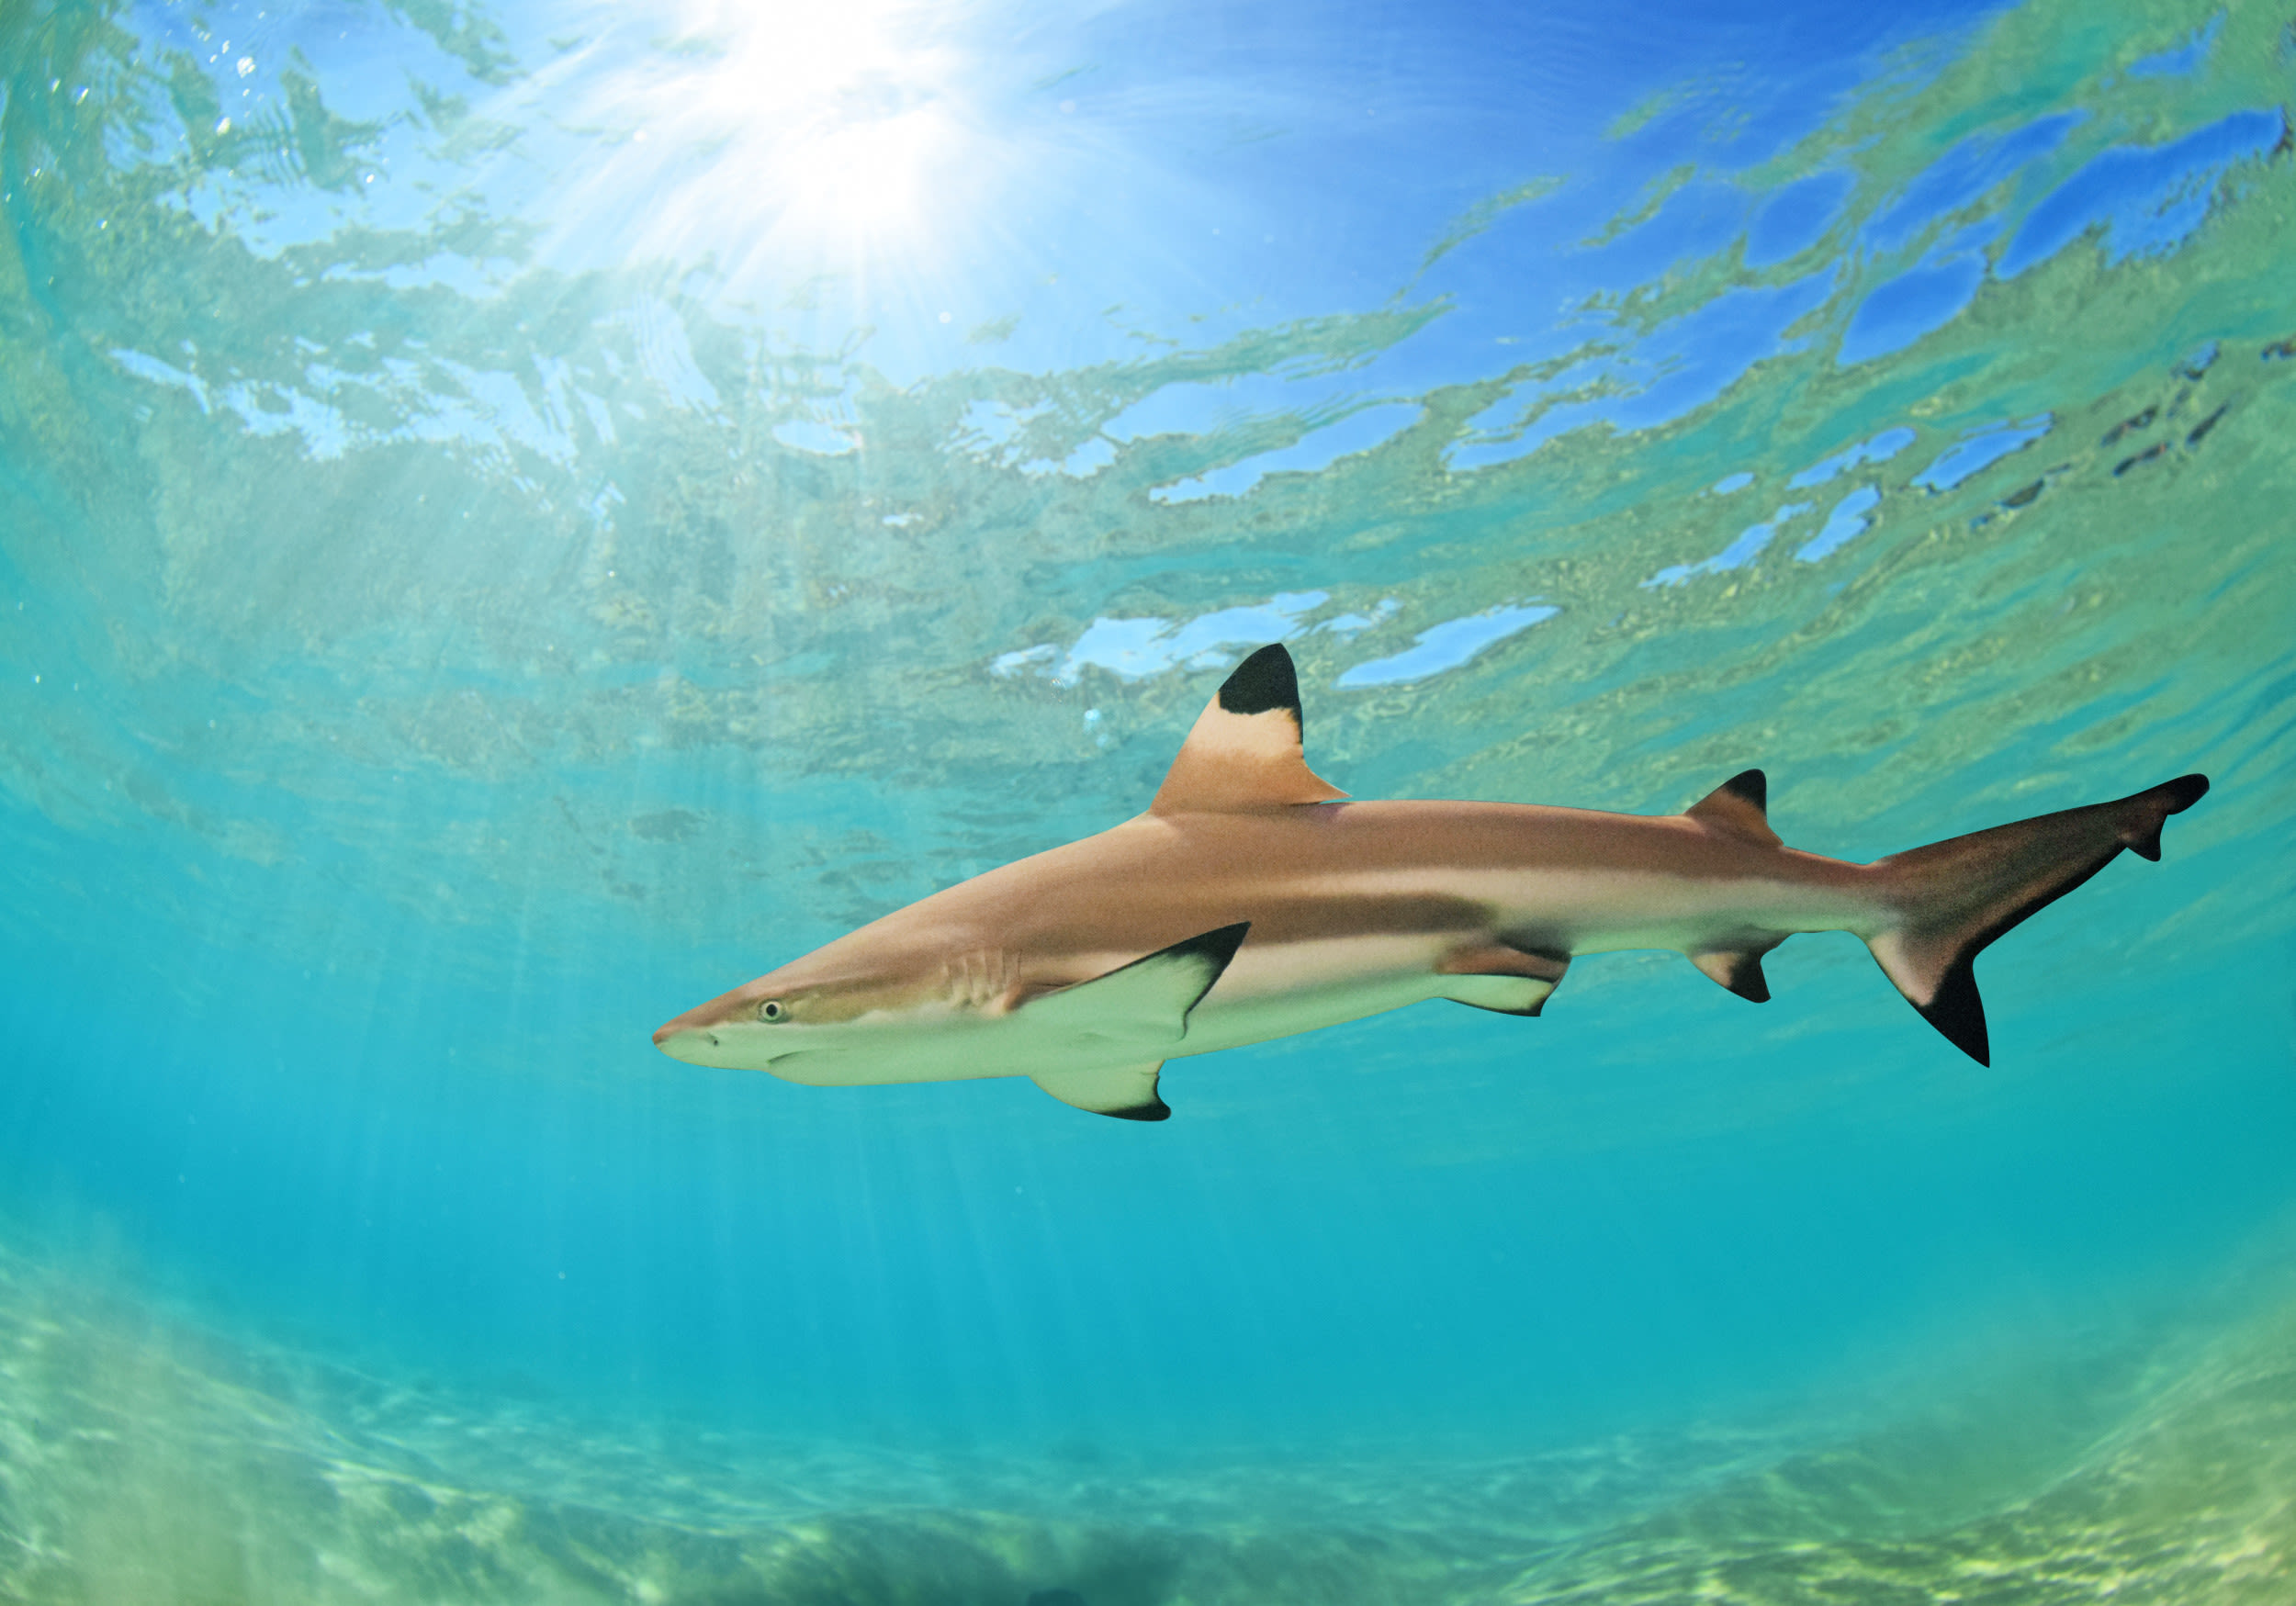 Beachgoer has close encounter with shark on Hawaii shore: "Terrifying"